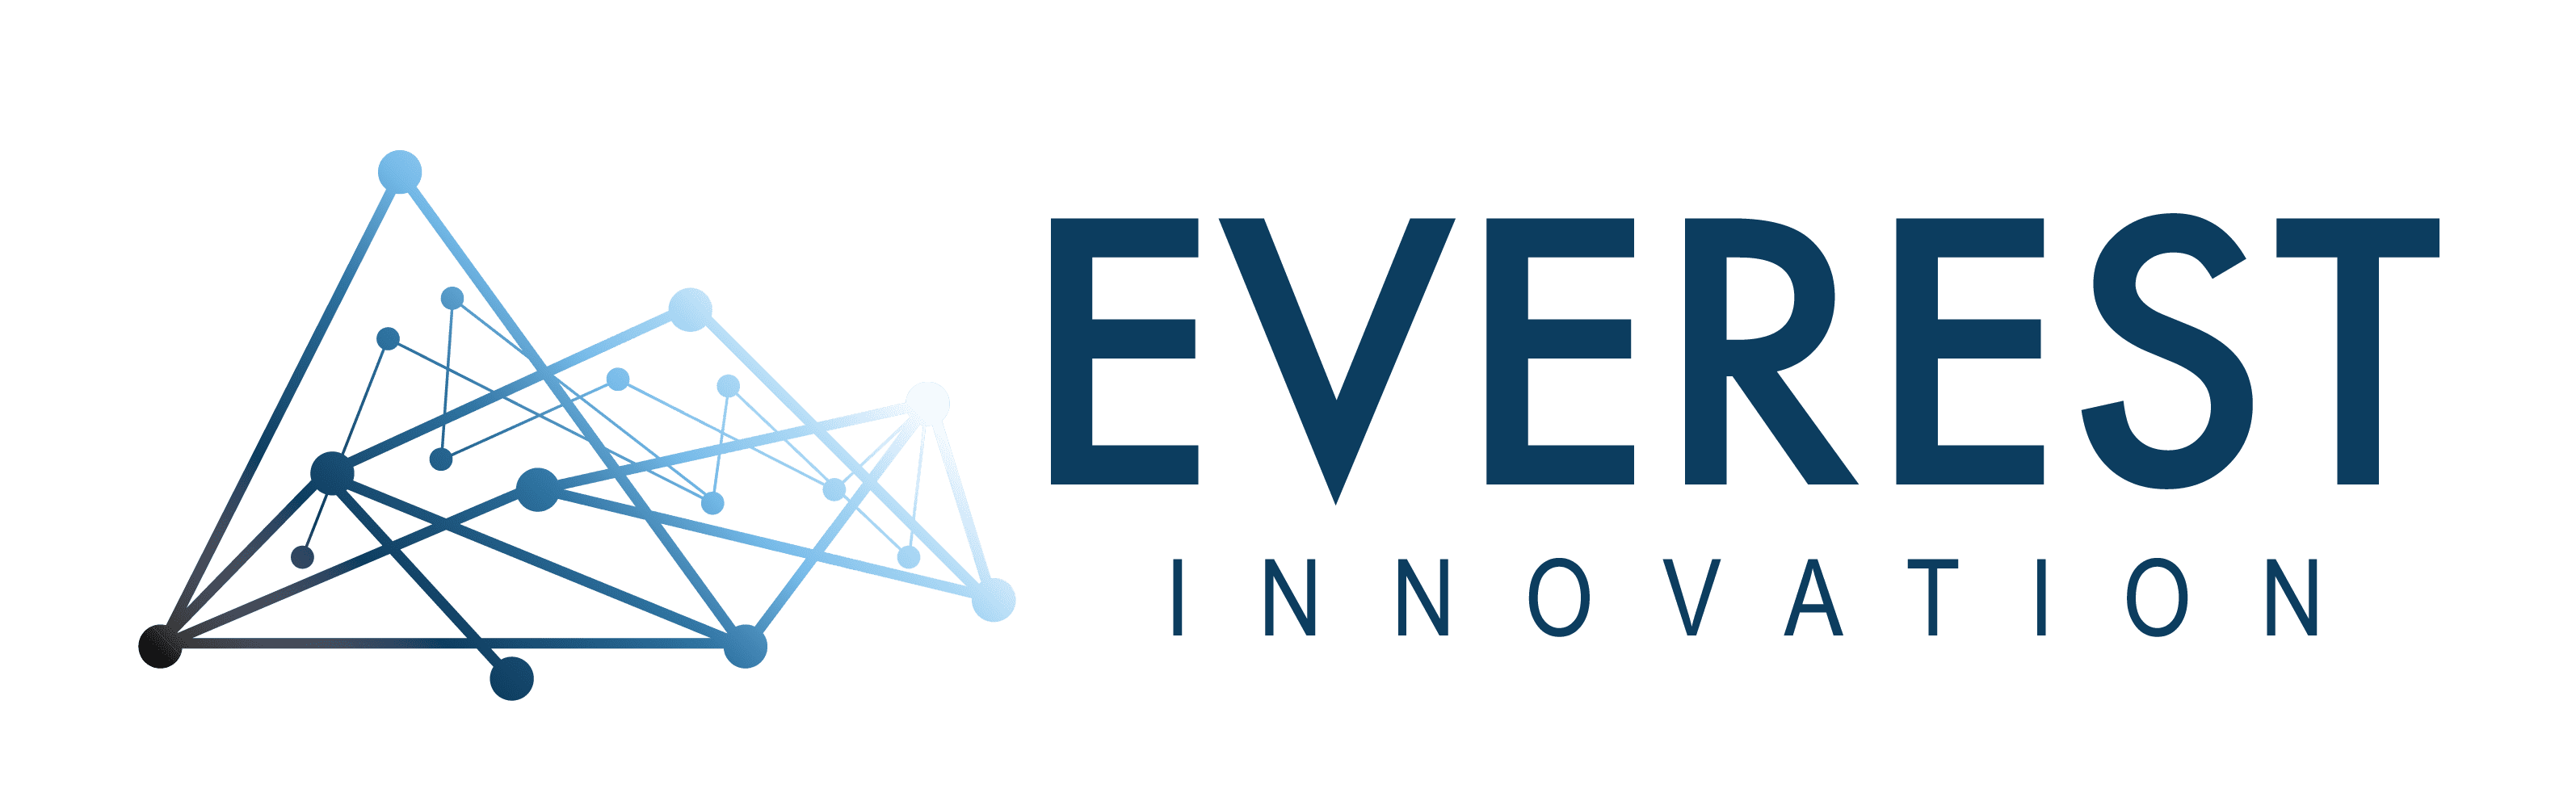 Everest Innovation